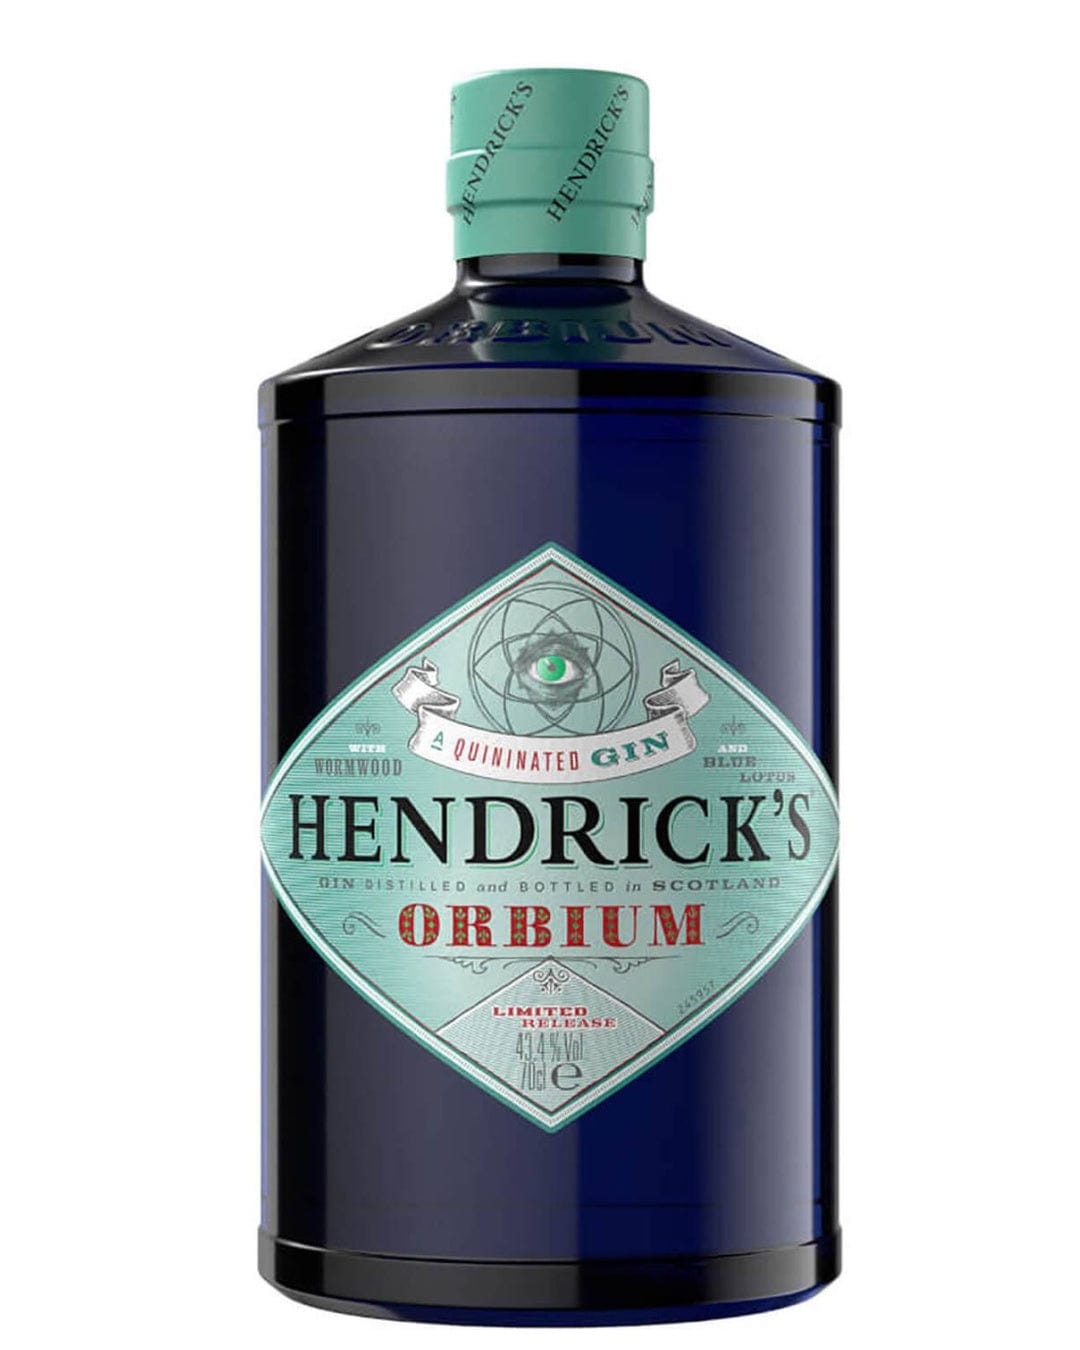 Hendrick's Orbium Gin, 70 cl